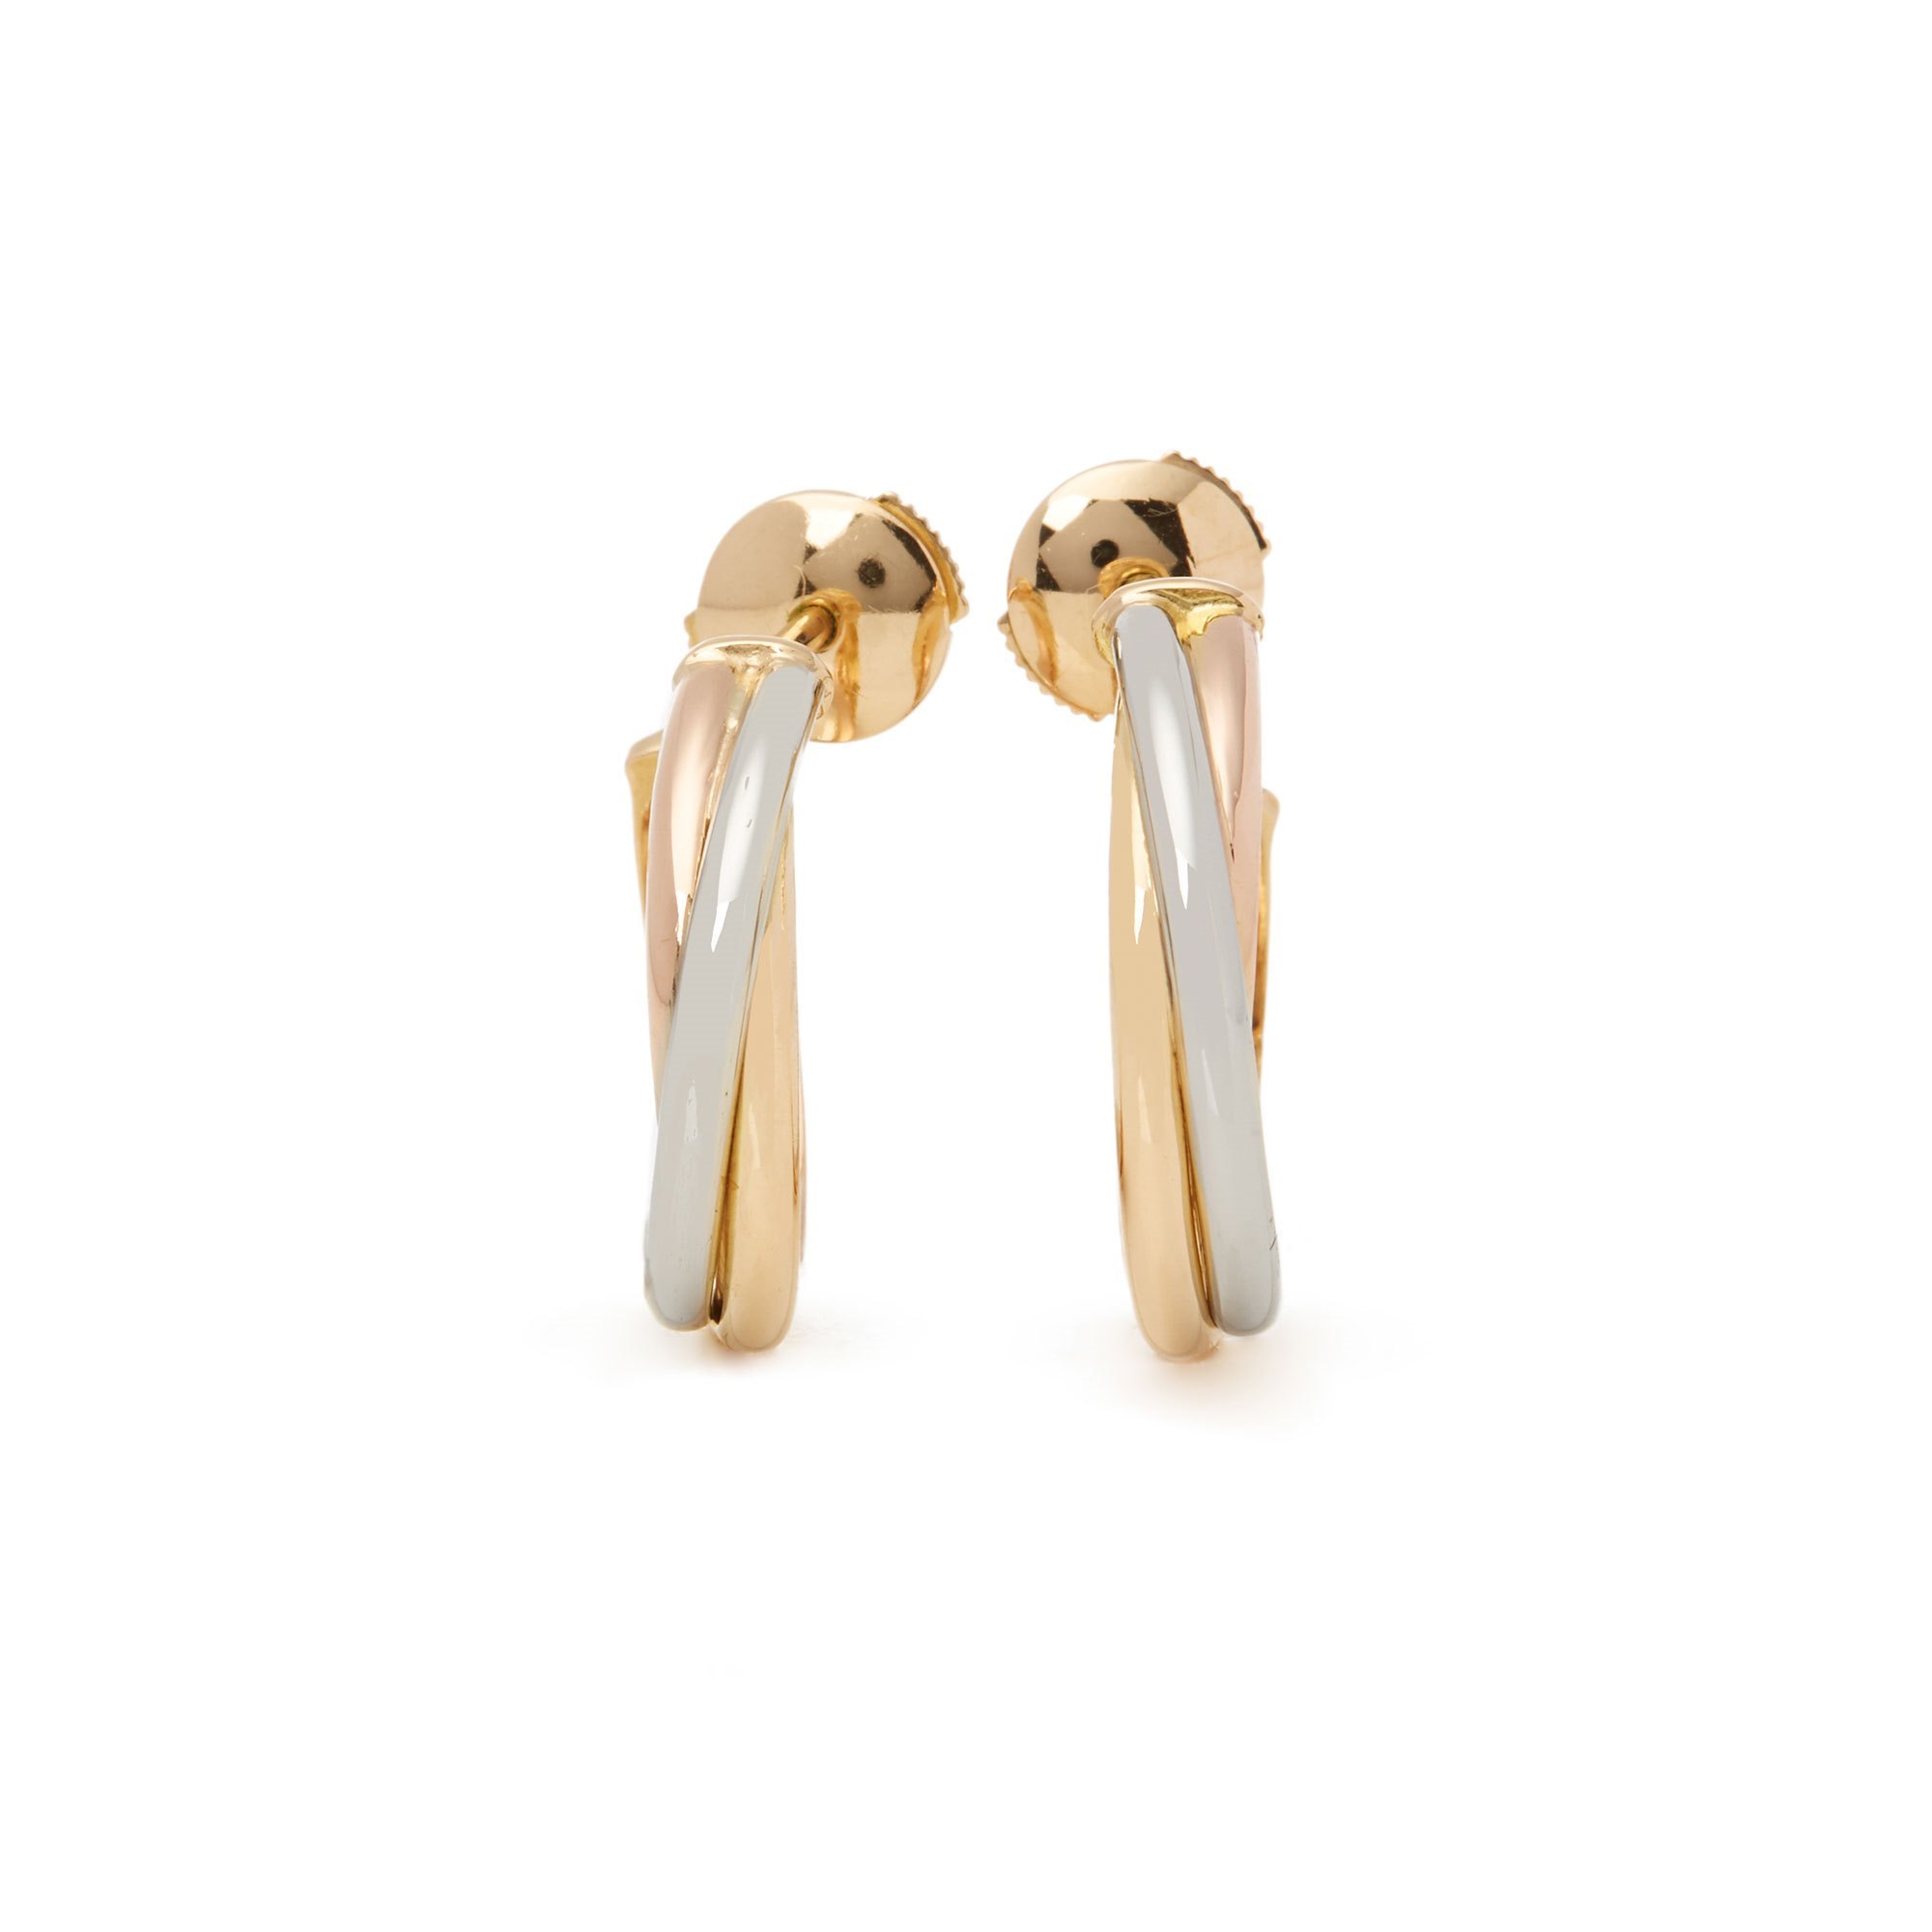 Cartier Trinity 18ct Gold Hoop Earrings